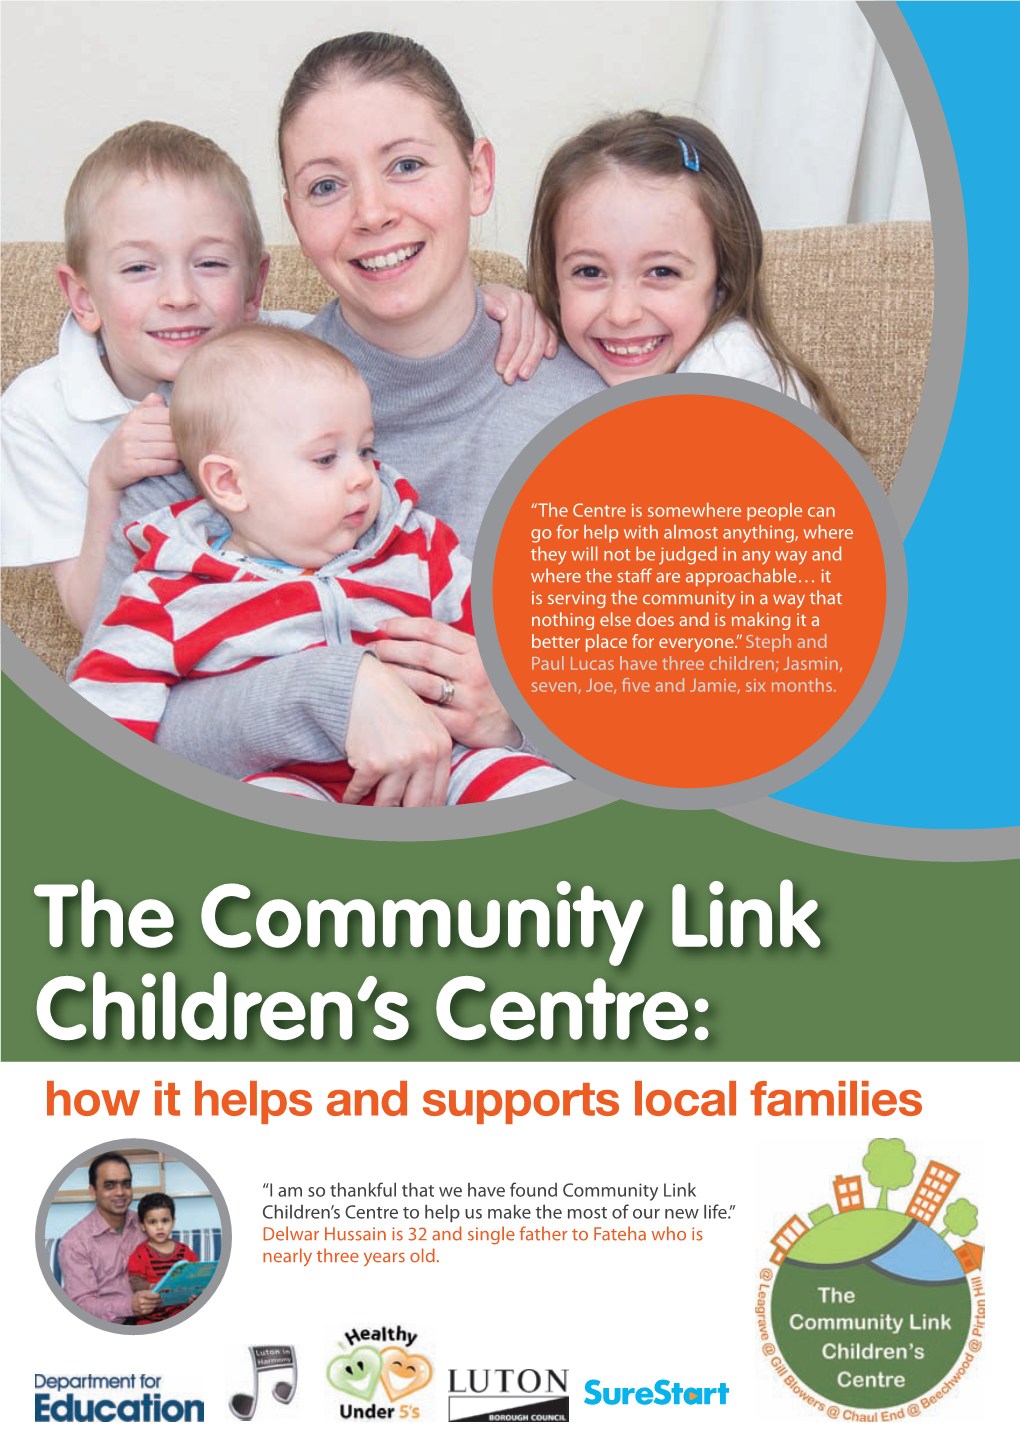 The Community Link Children's Centre